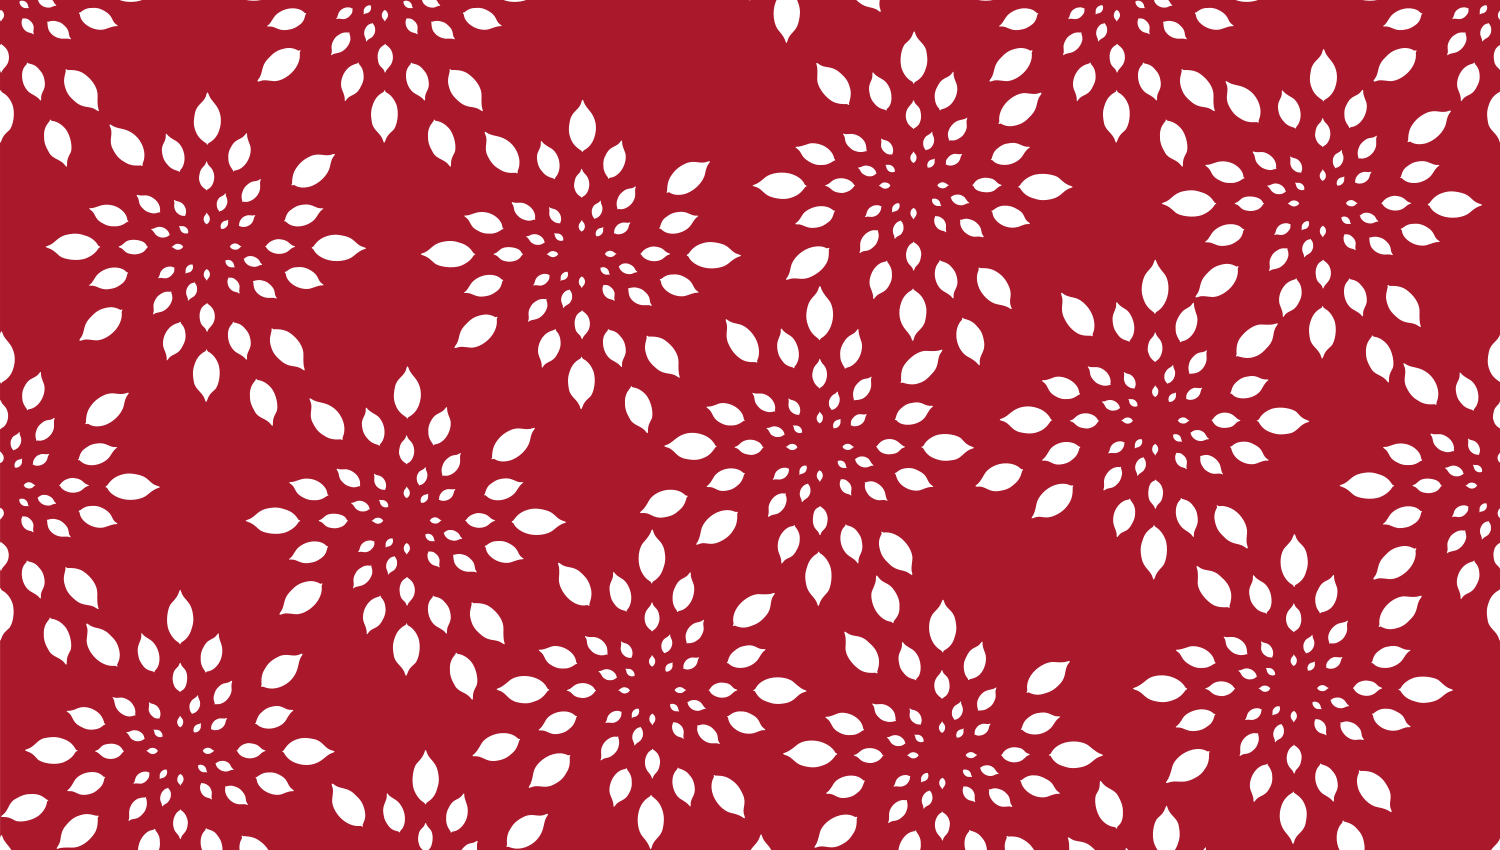 Parasoleil™ Lemon Drop© pattern displayed with a standard color overlay